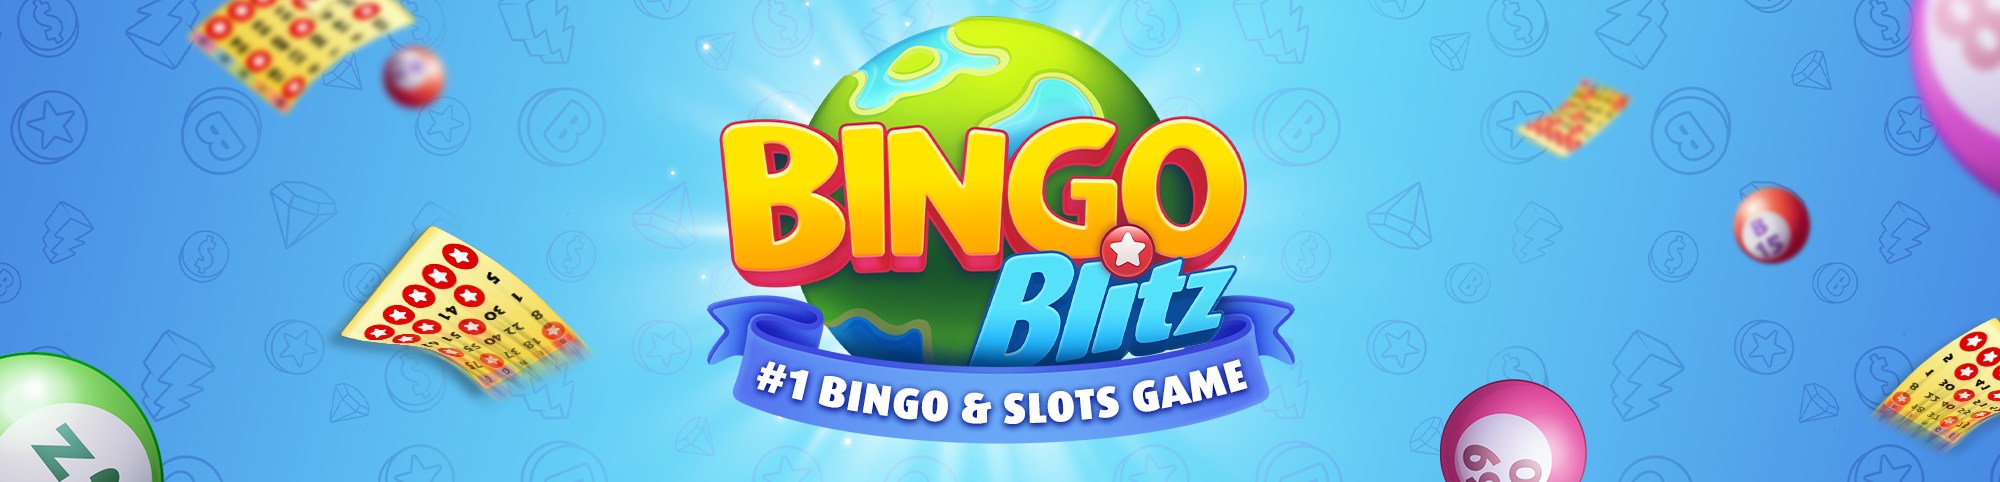 bingo blitz free slot spins